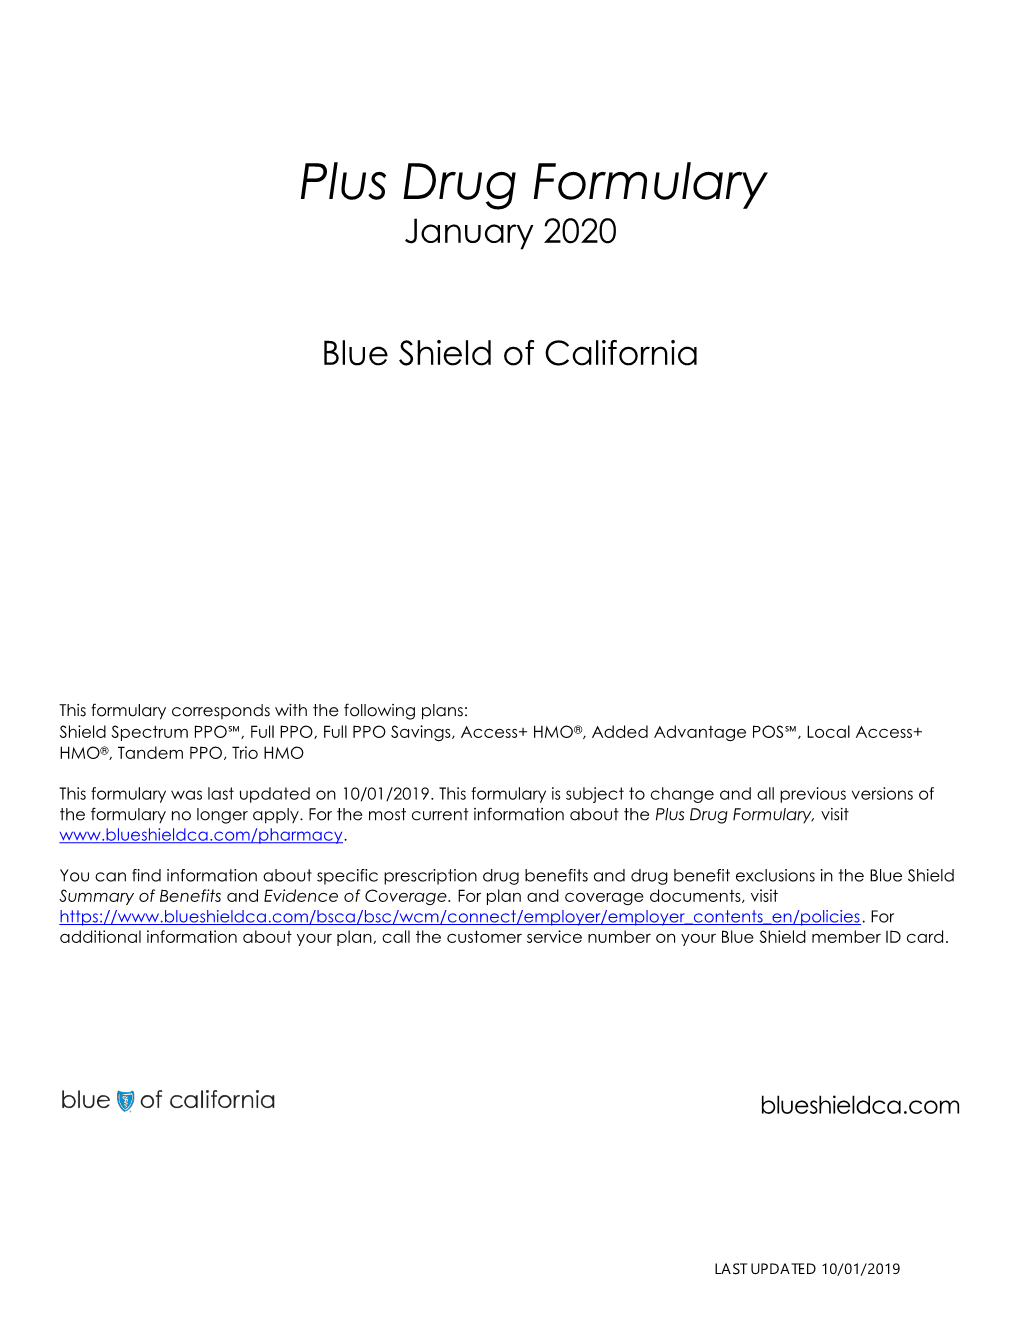 PLUS Drug Formulary (DMHC)